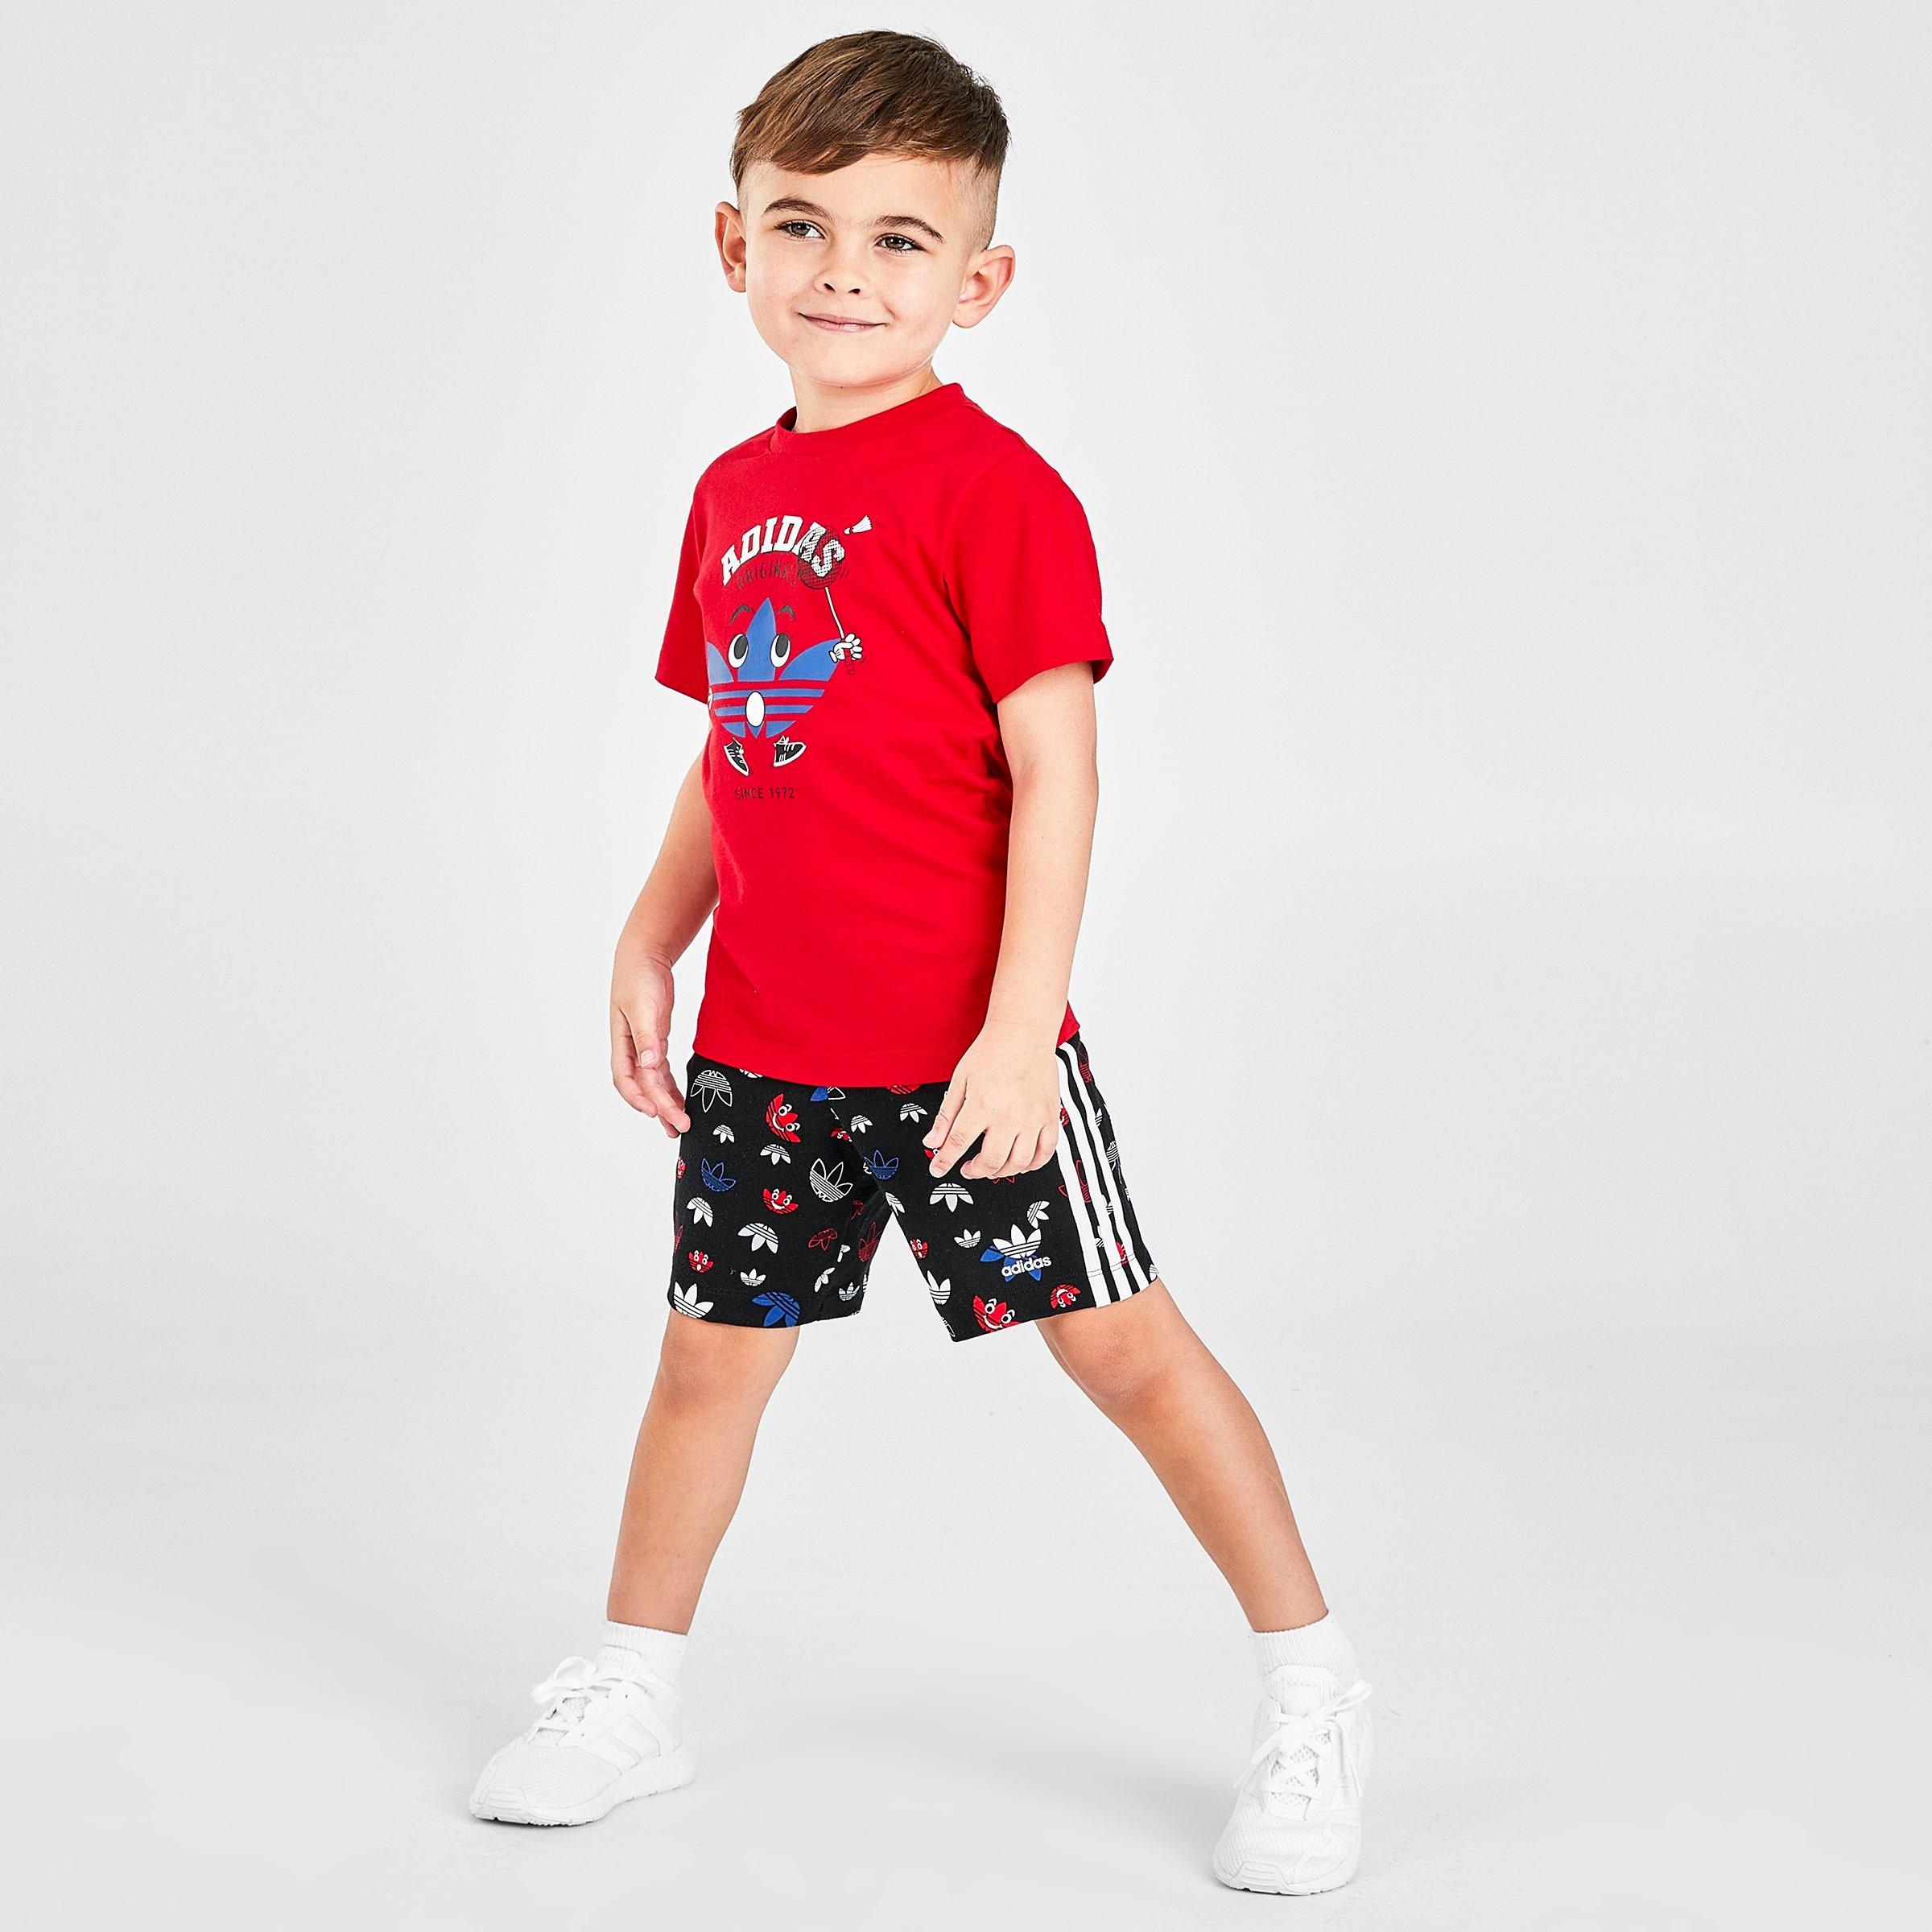 infant adidas shorts and shirt